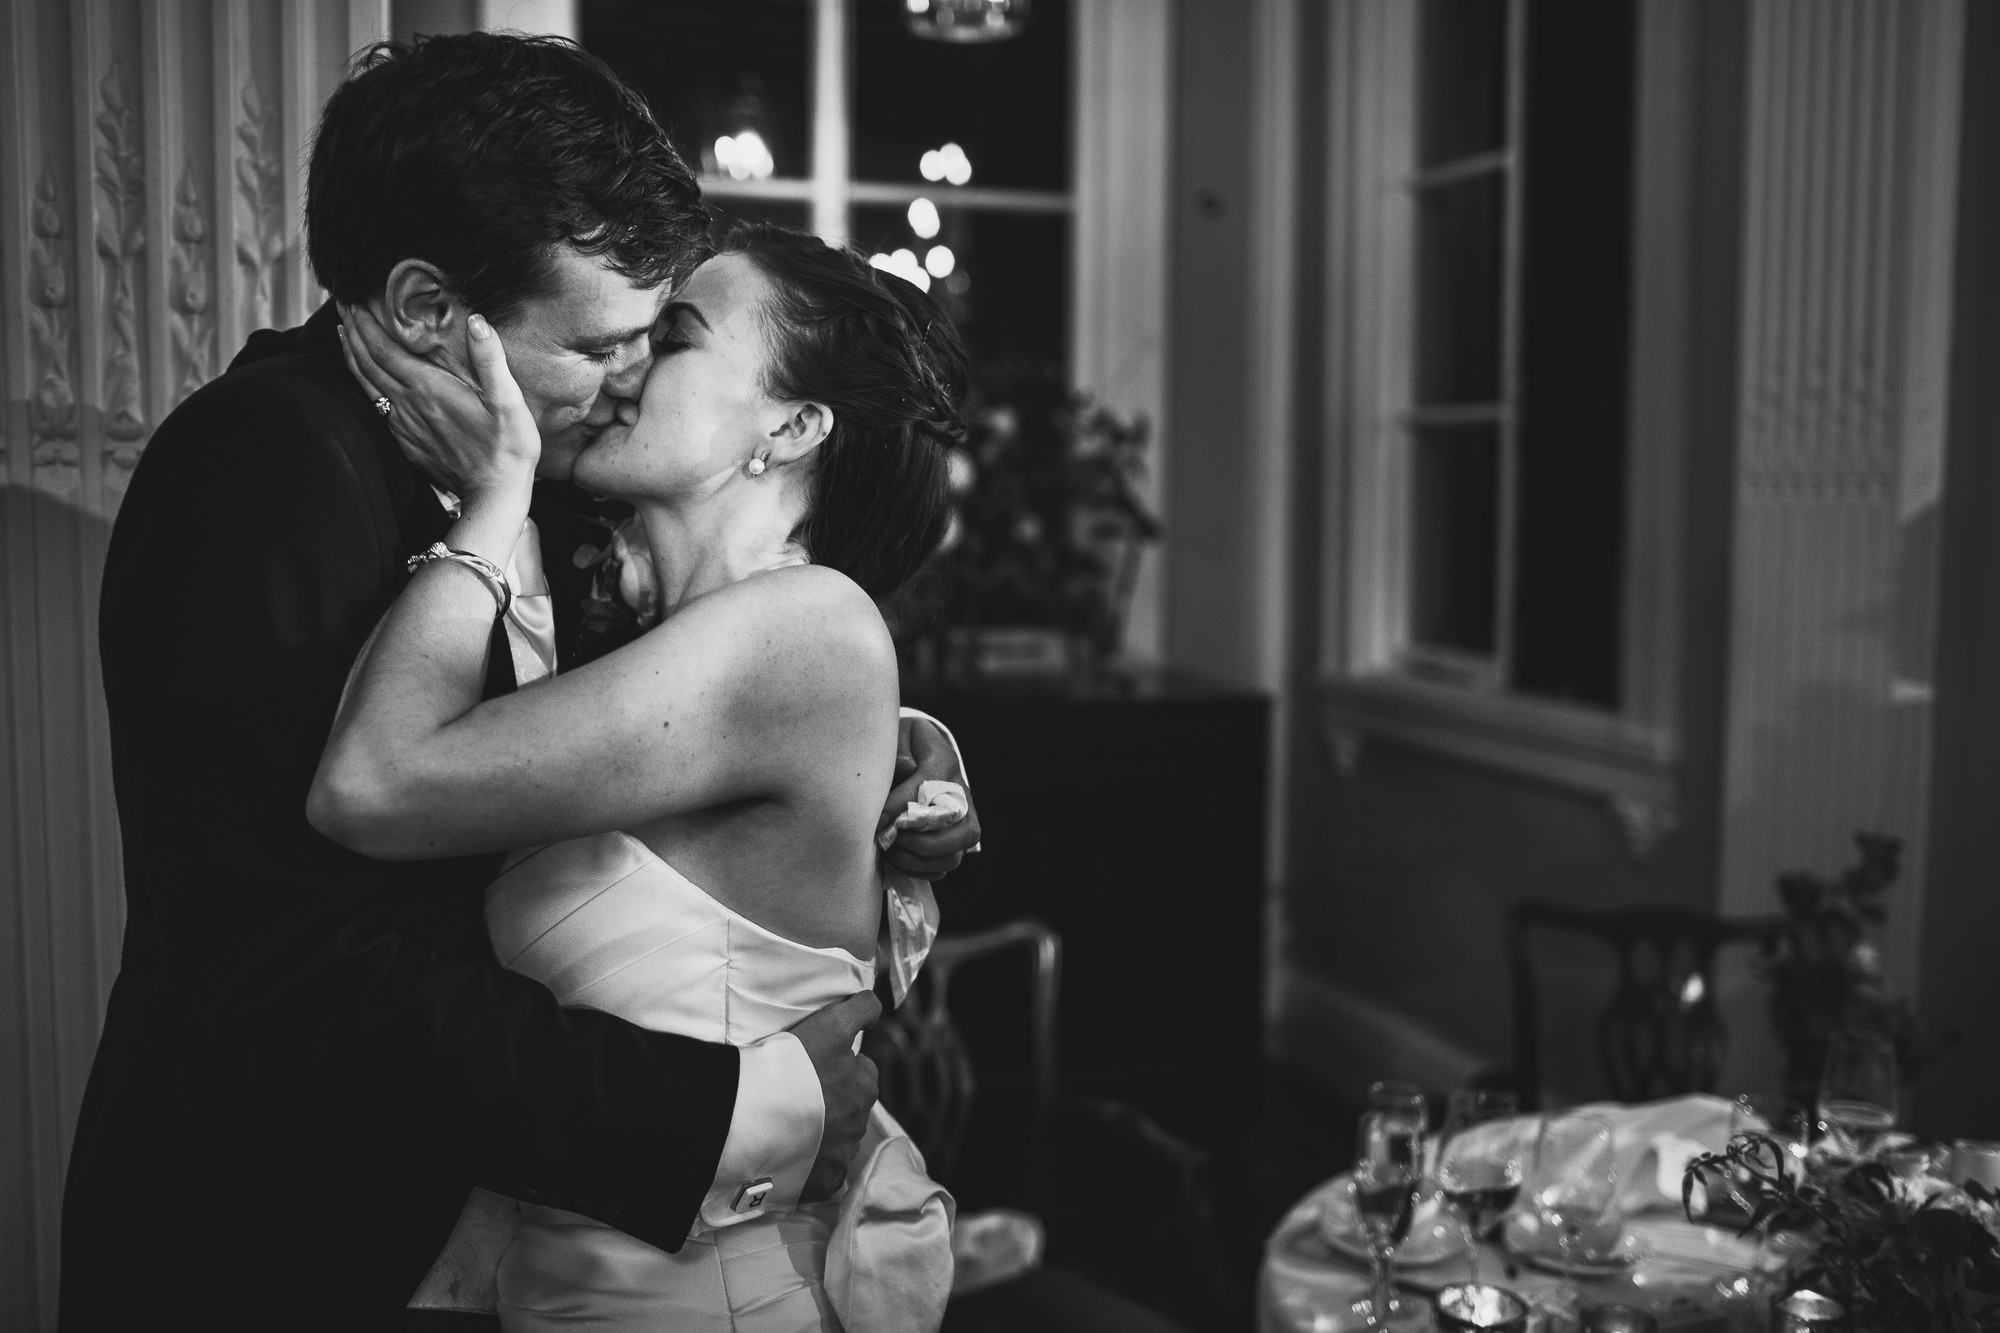 Best cheshire wedding photographer 2015